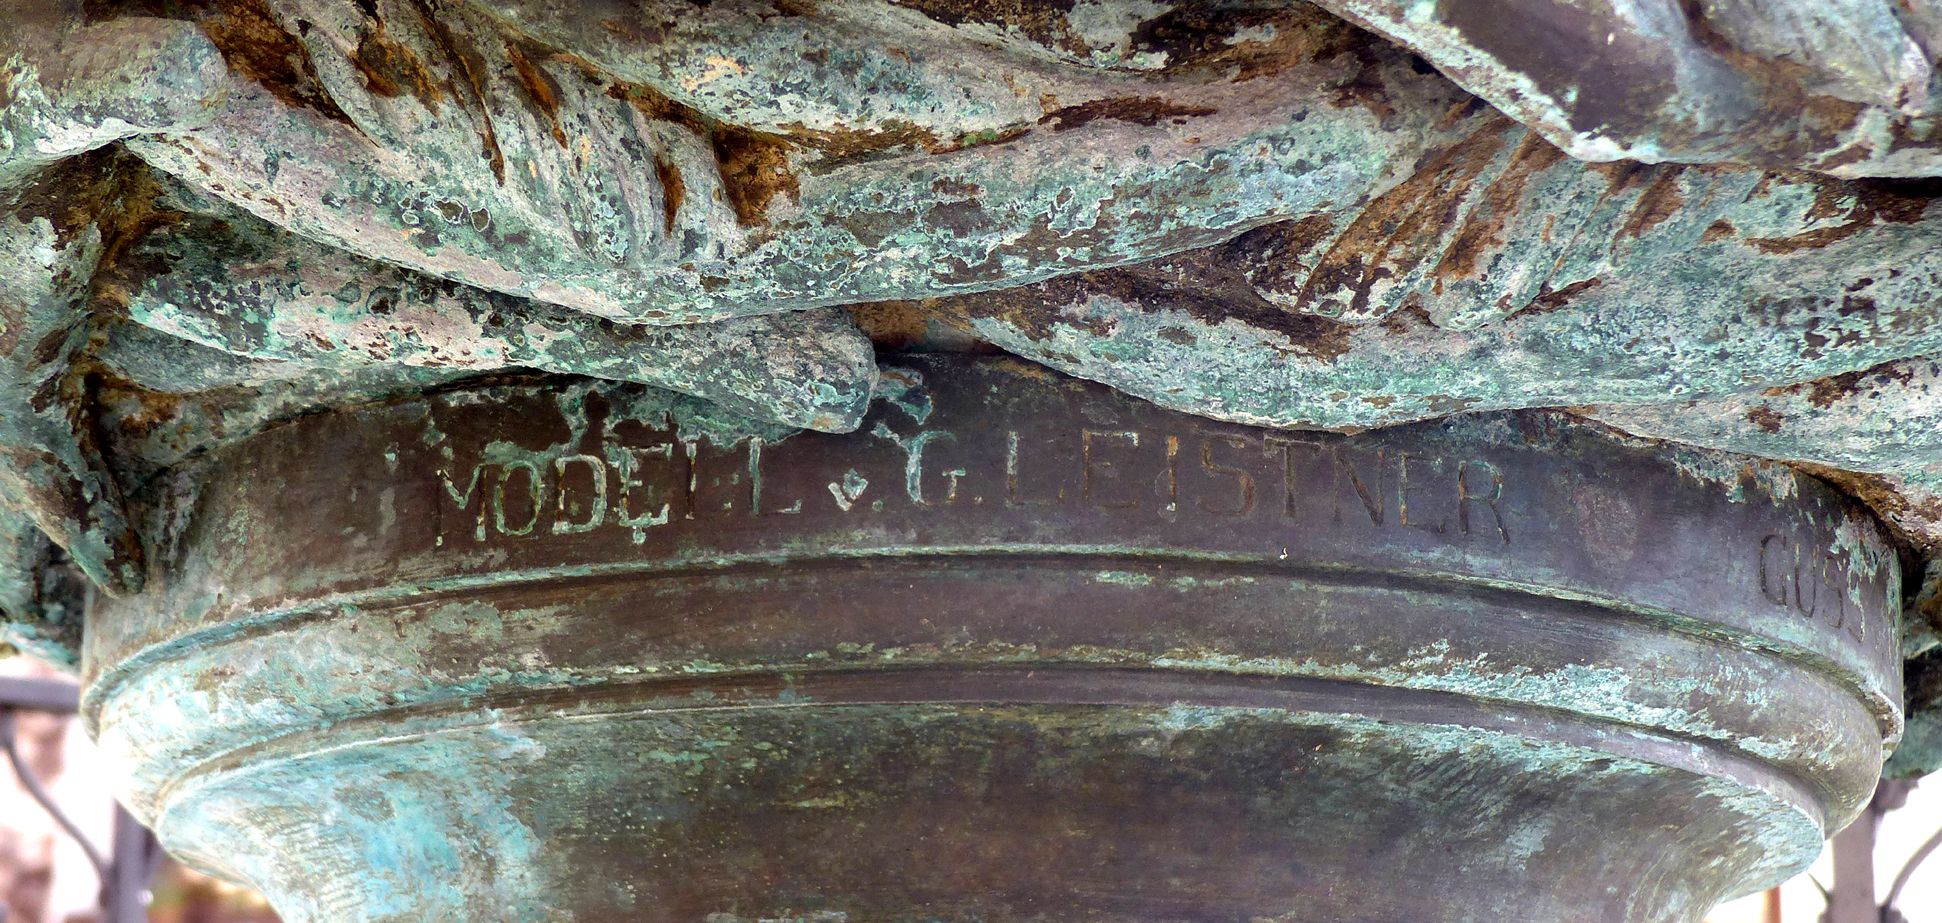 Geiersbrünnlein (Little vulture fountain) Inscription, model G. Leistner